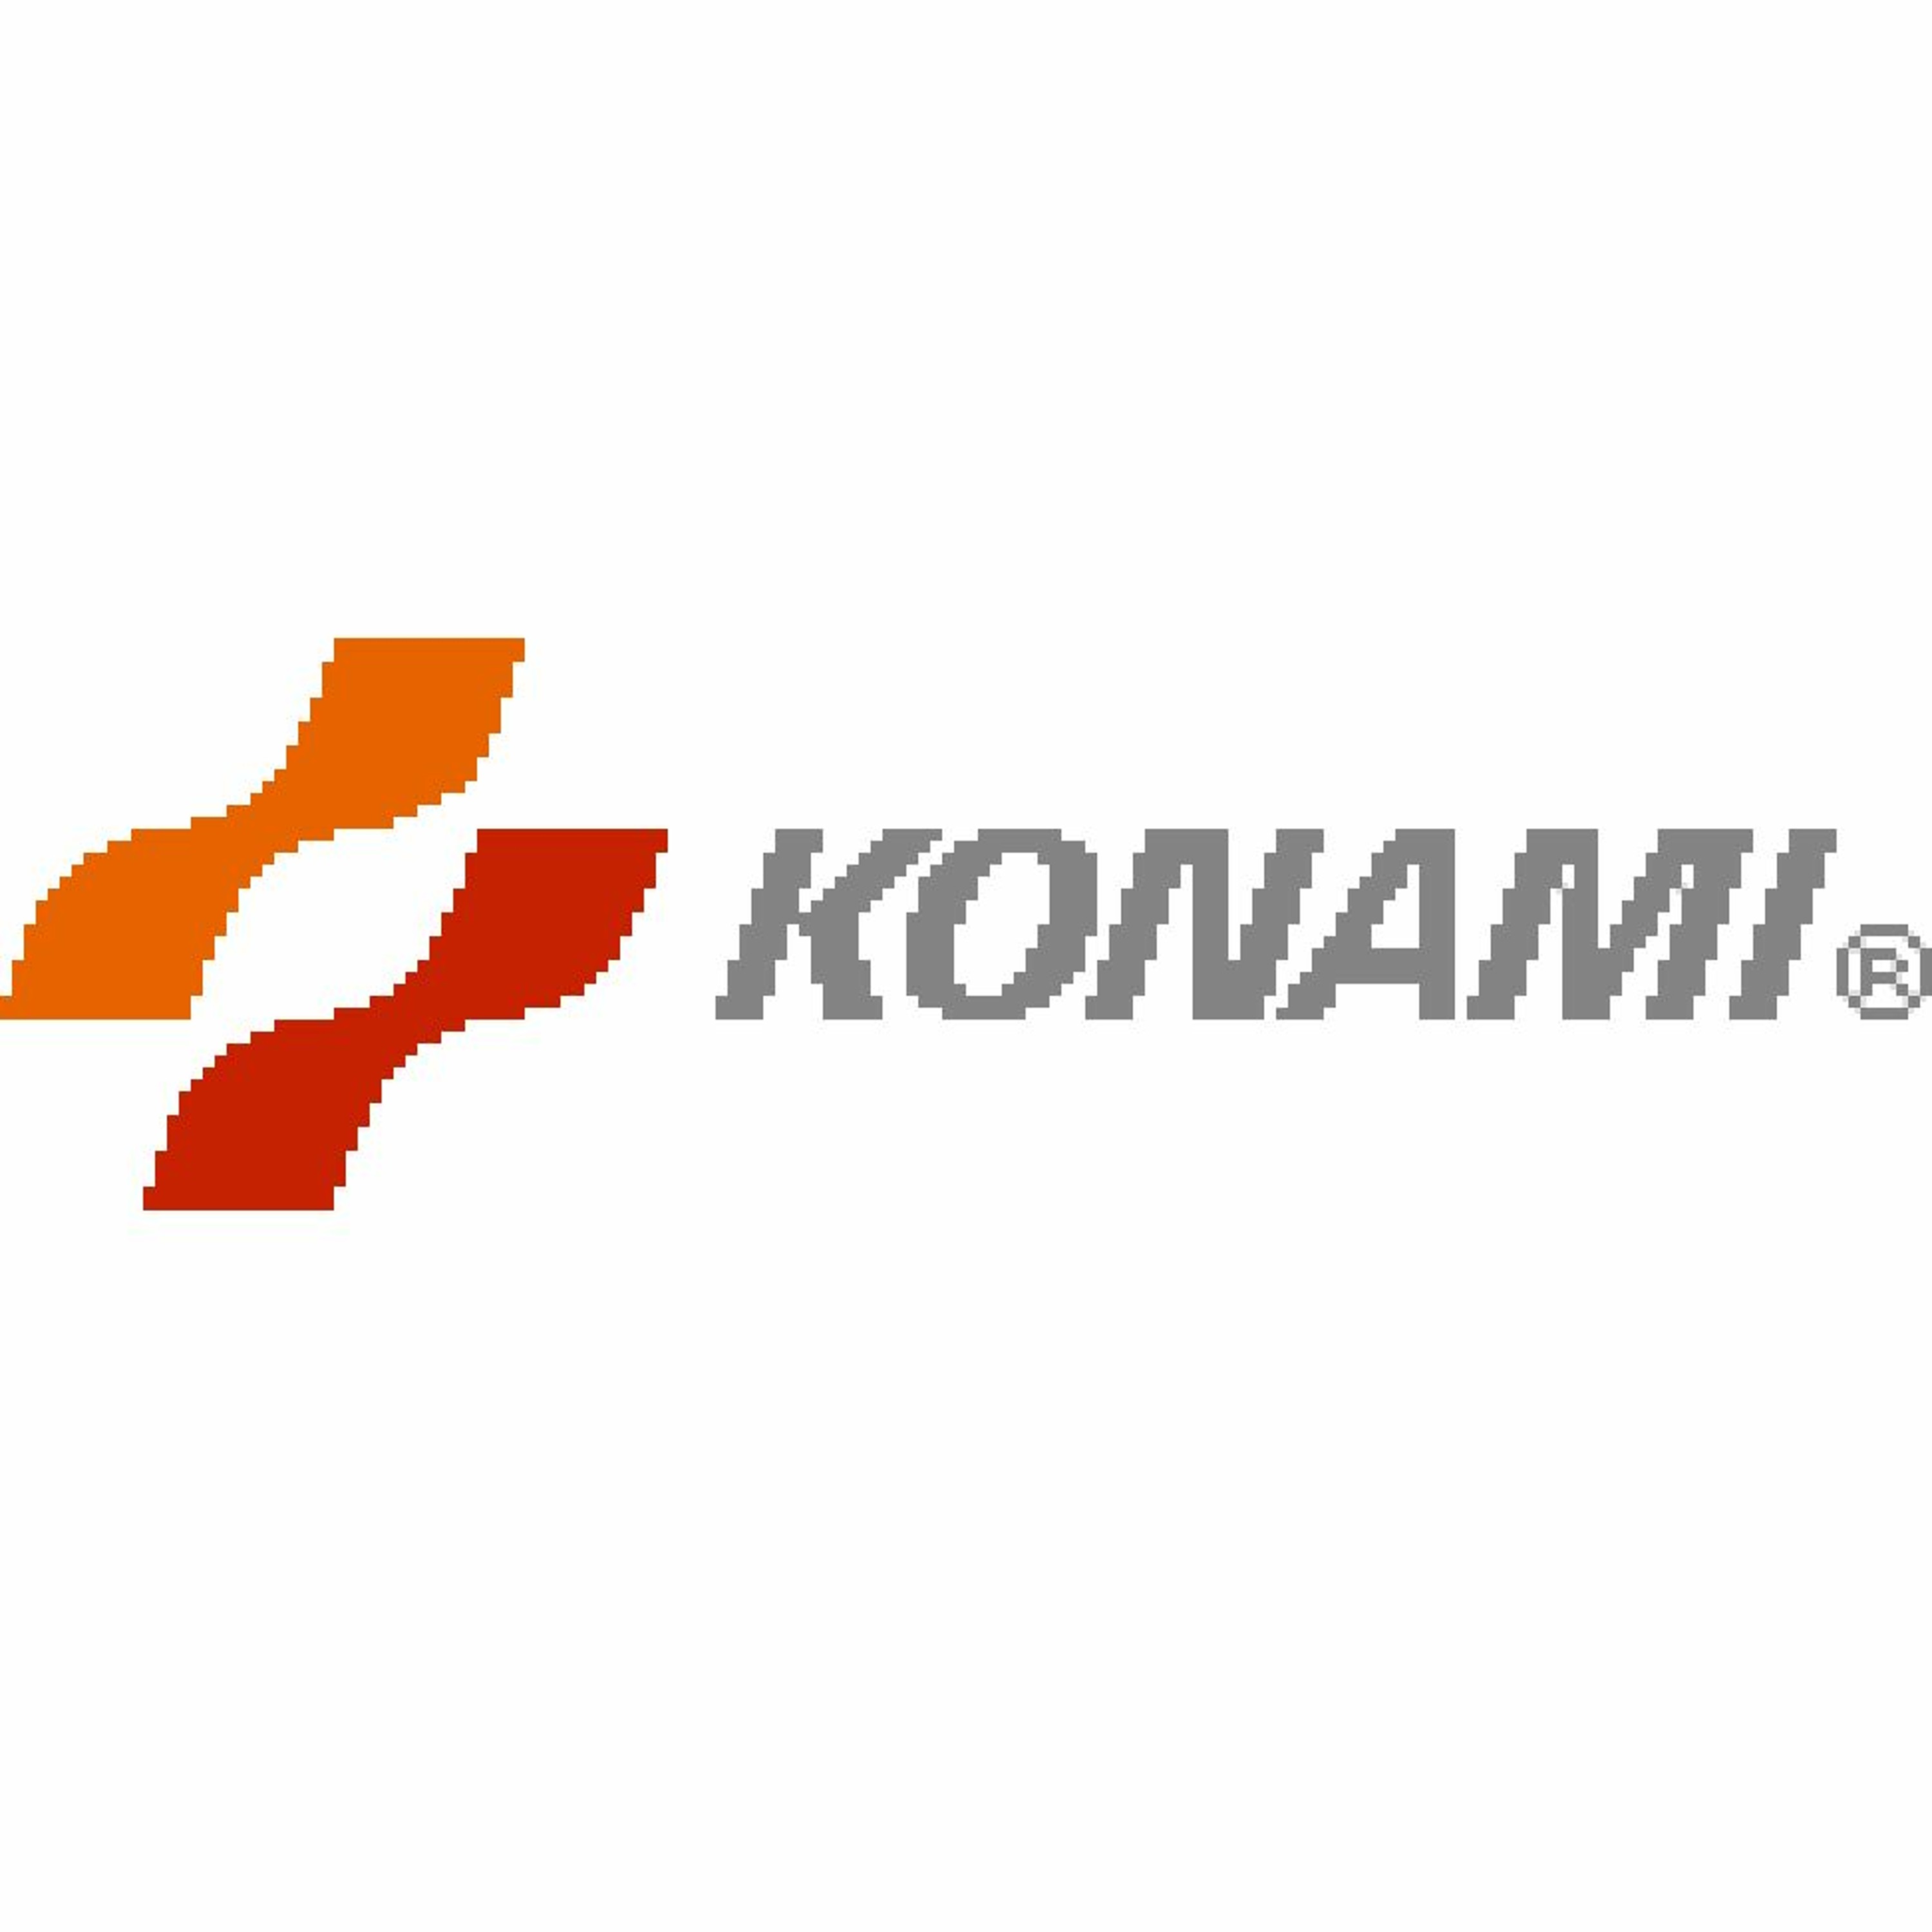 Episode 17: Konami's NES Music